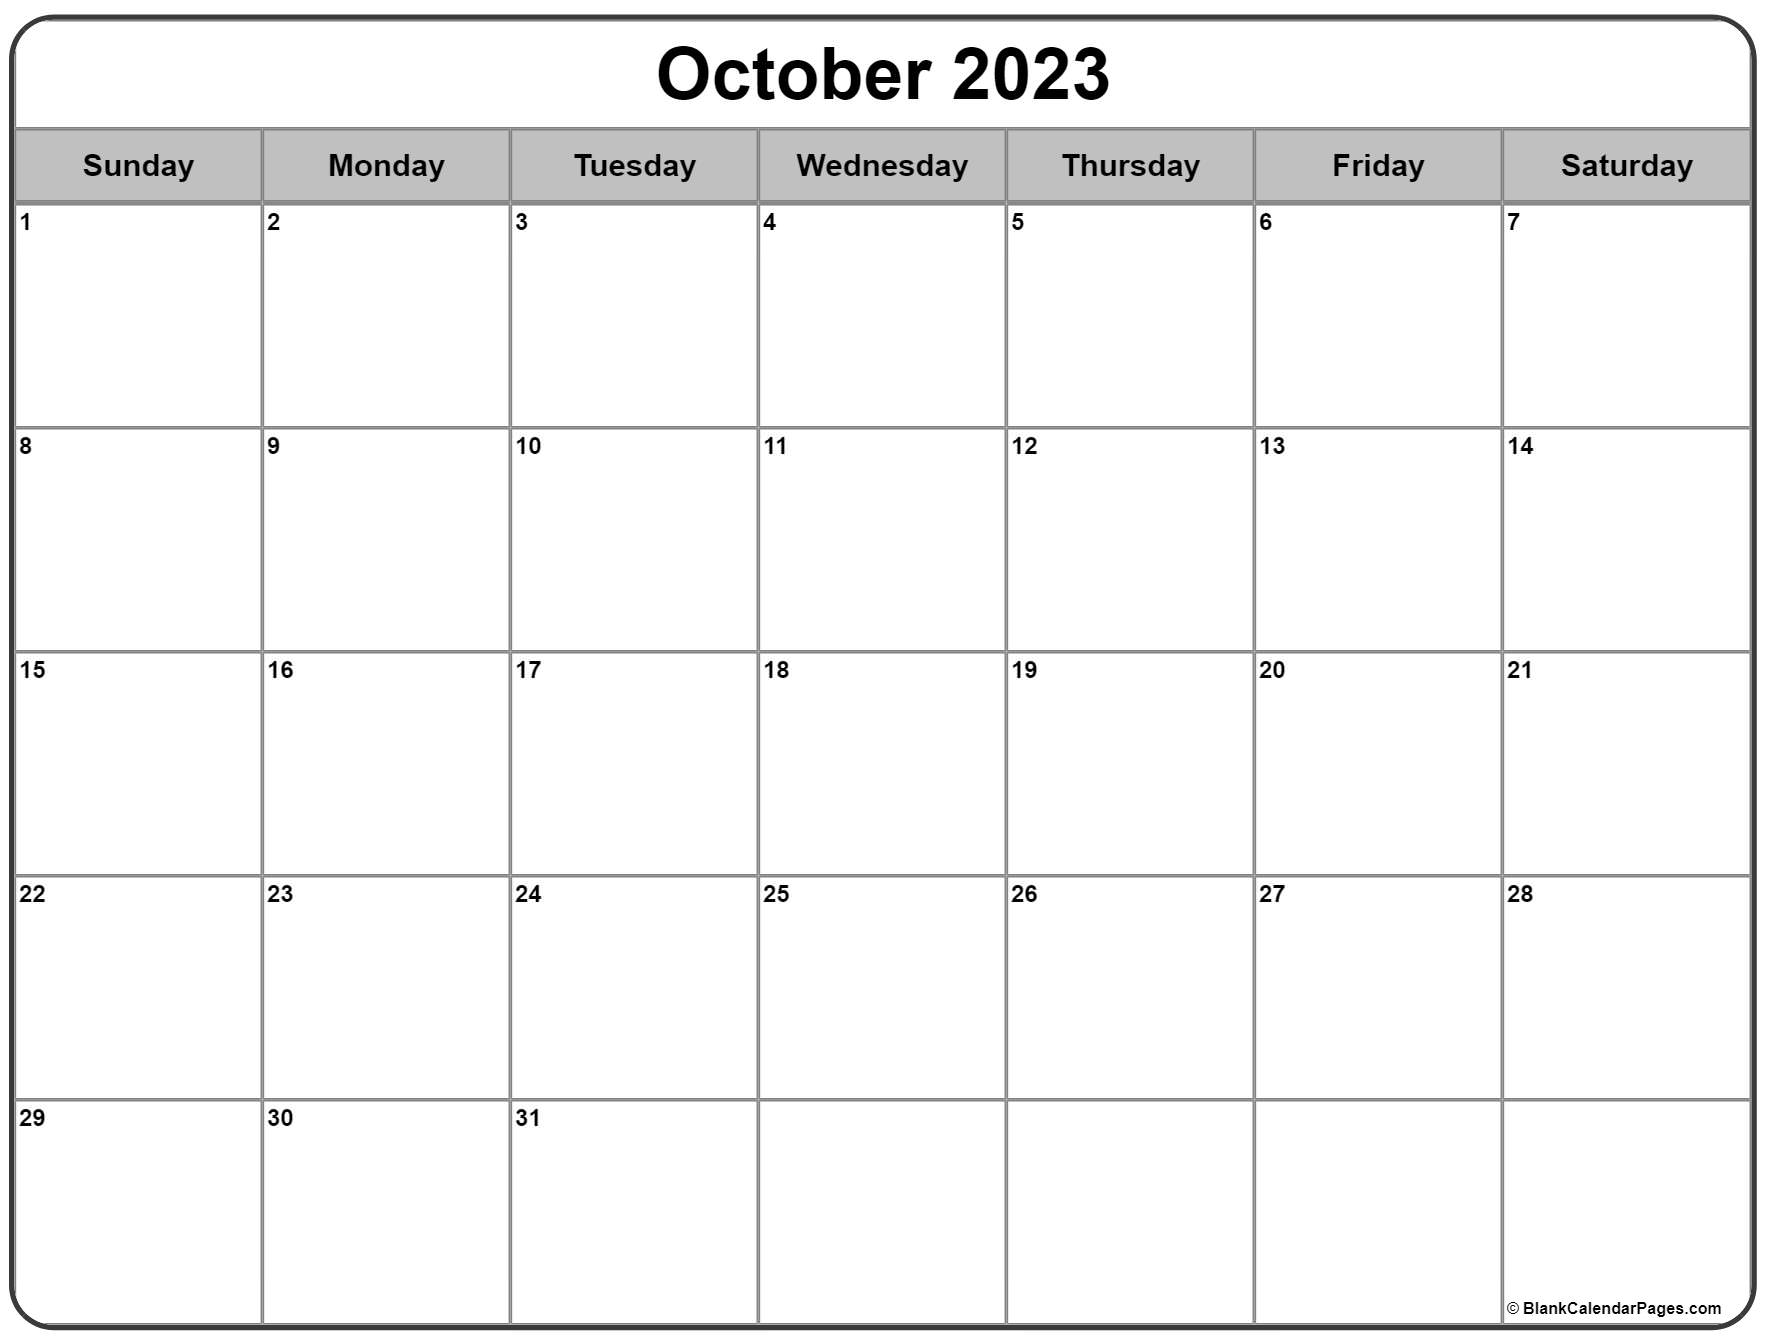 october-2023-calendar-printable-get-calendar-2023-update